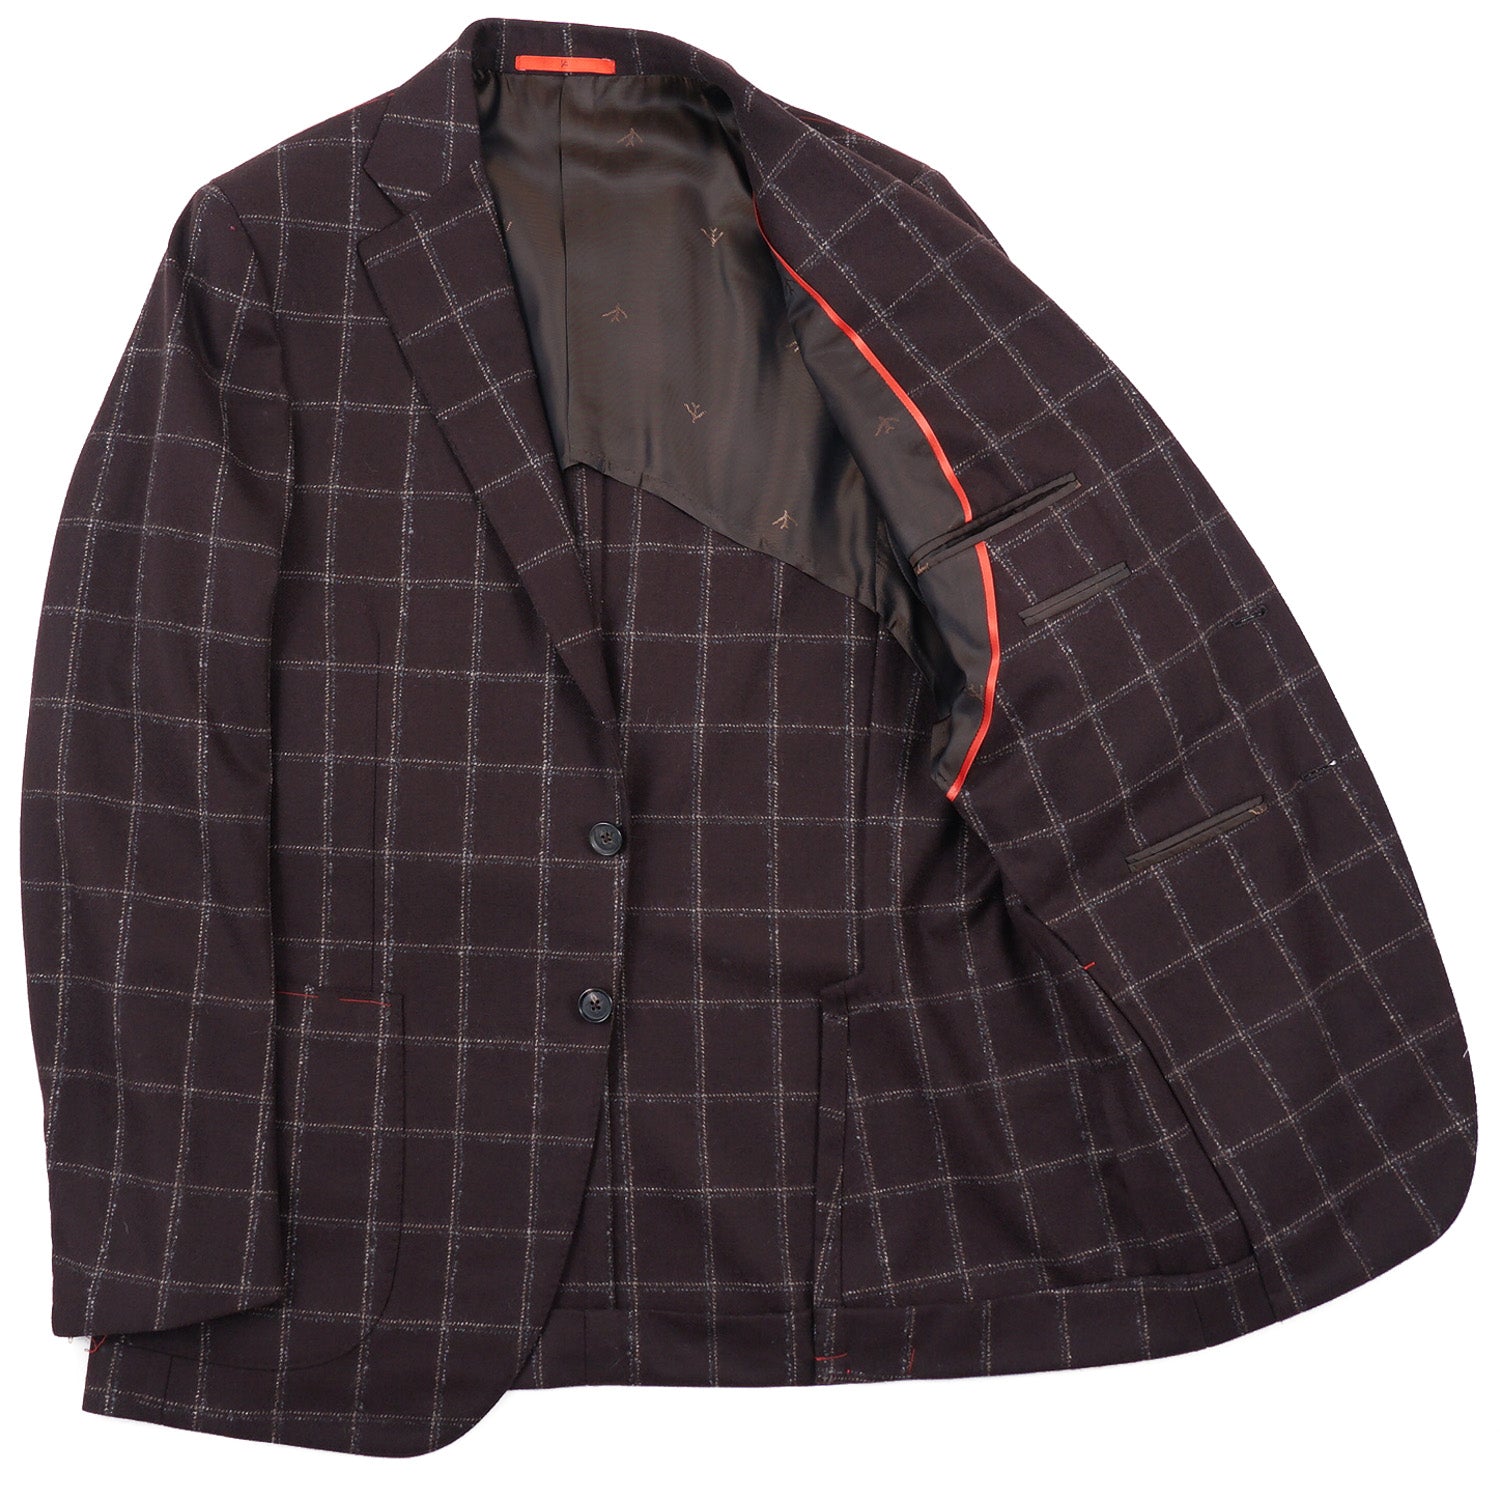 Isaia 'Sanita' Brushed Flannel Wool Suit - Top Shelf Apparel